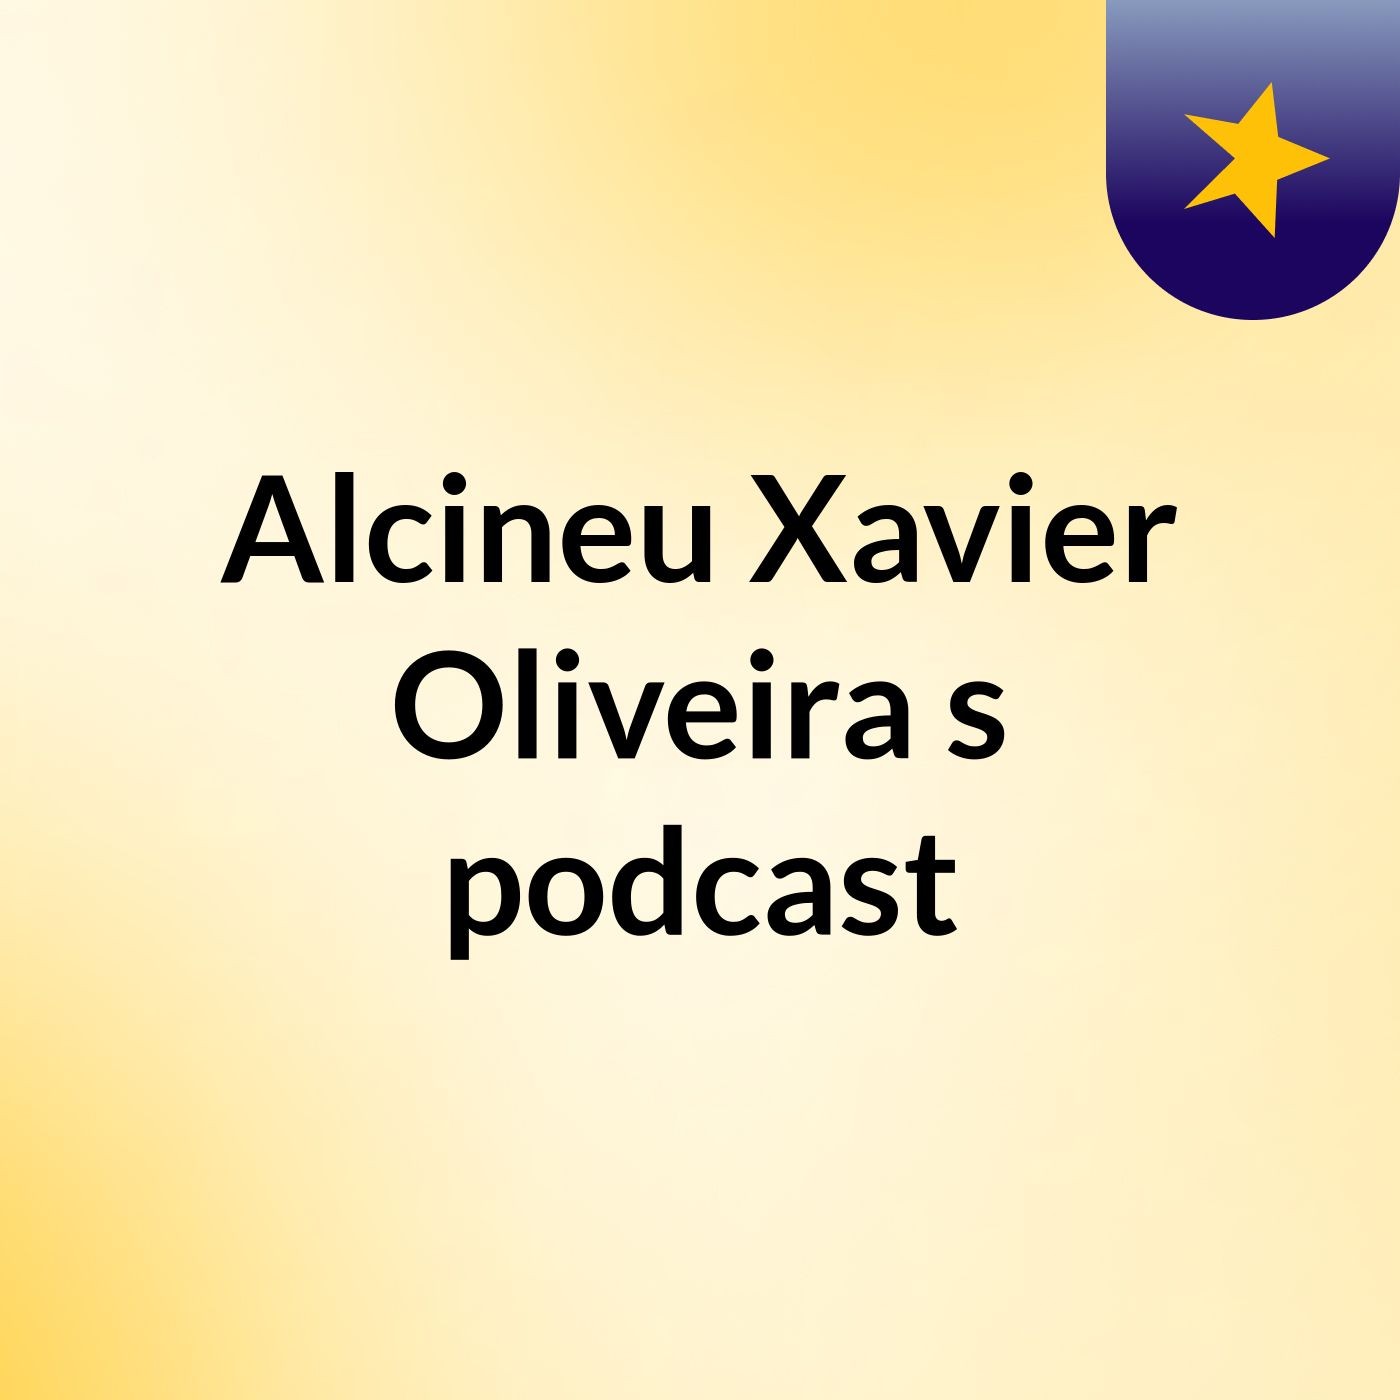 Alcineu Xavier Oliveira's podcast